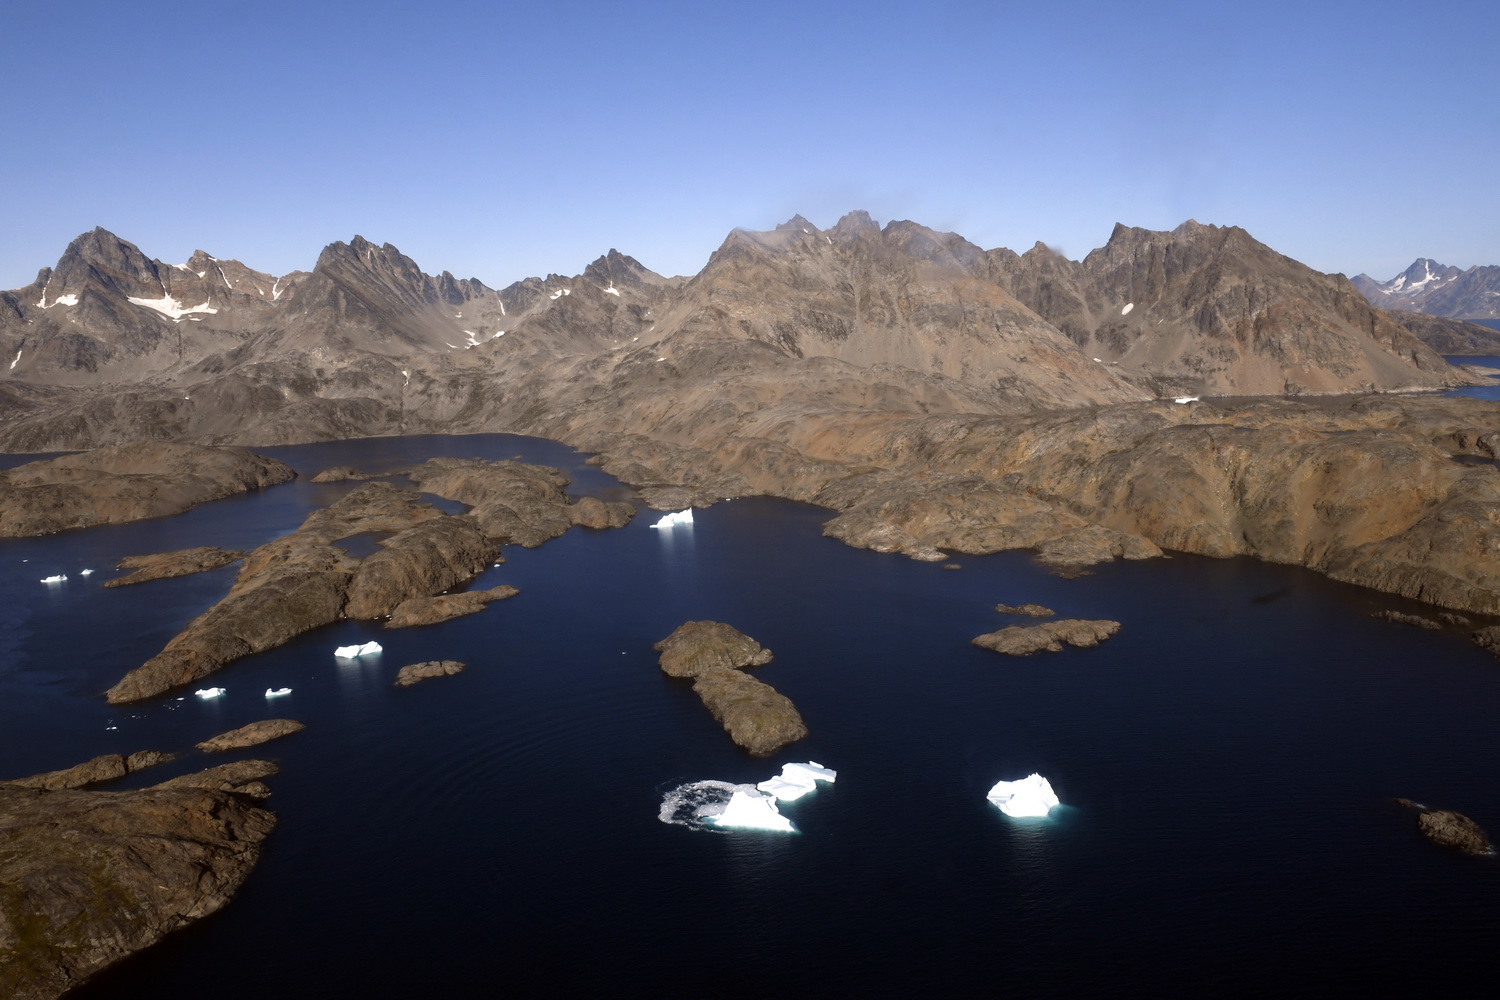 Dolph Kessler - Keep Greenland a secret part 1 the east 